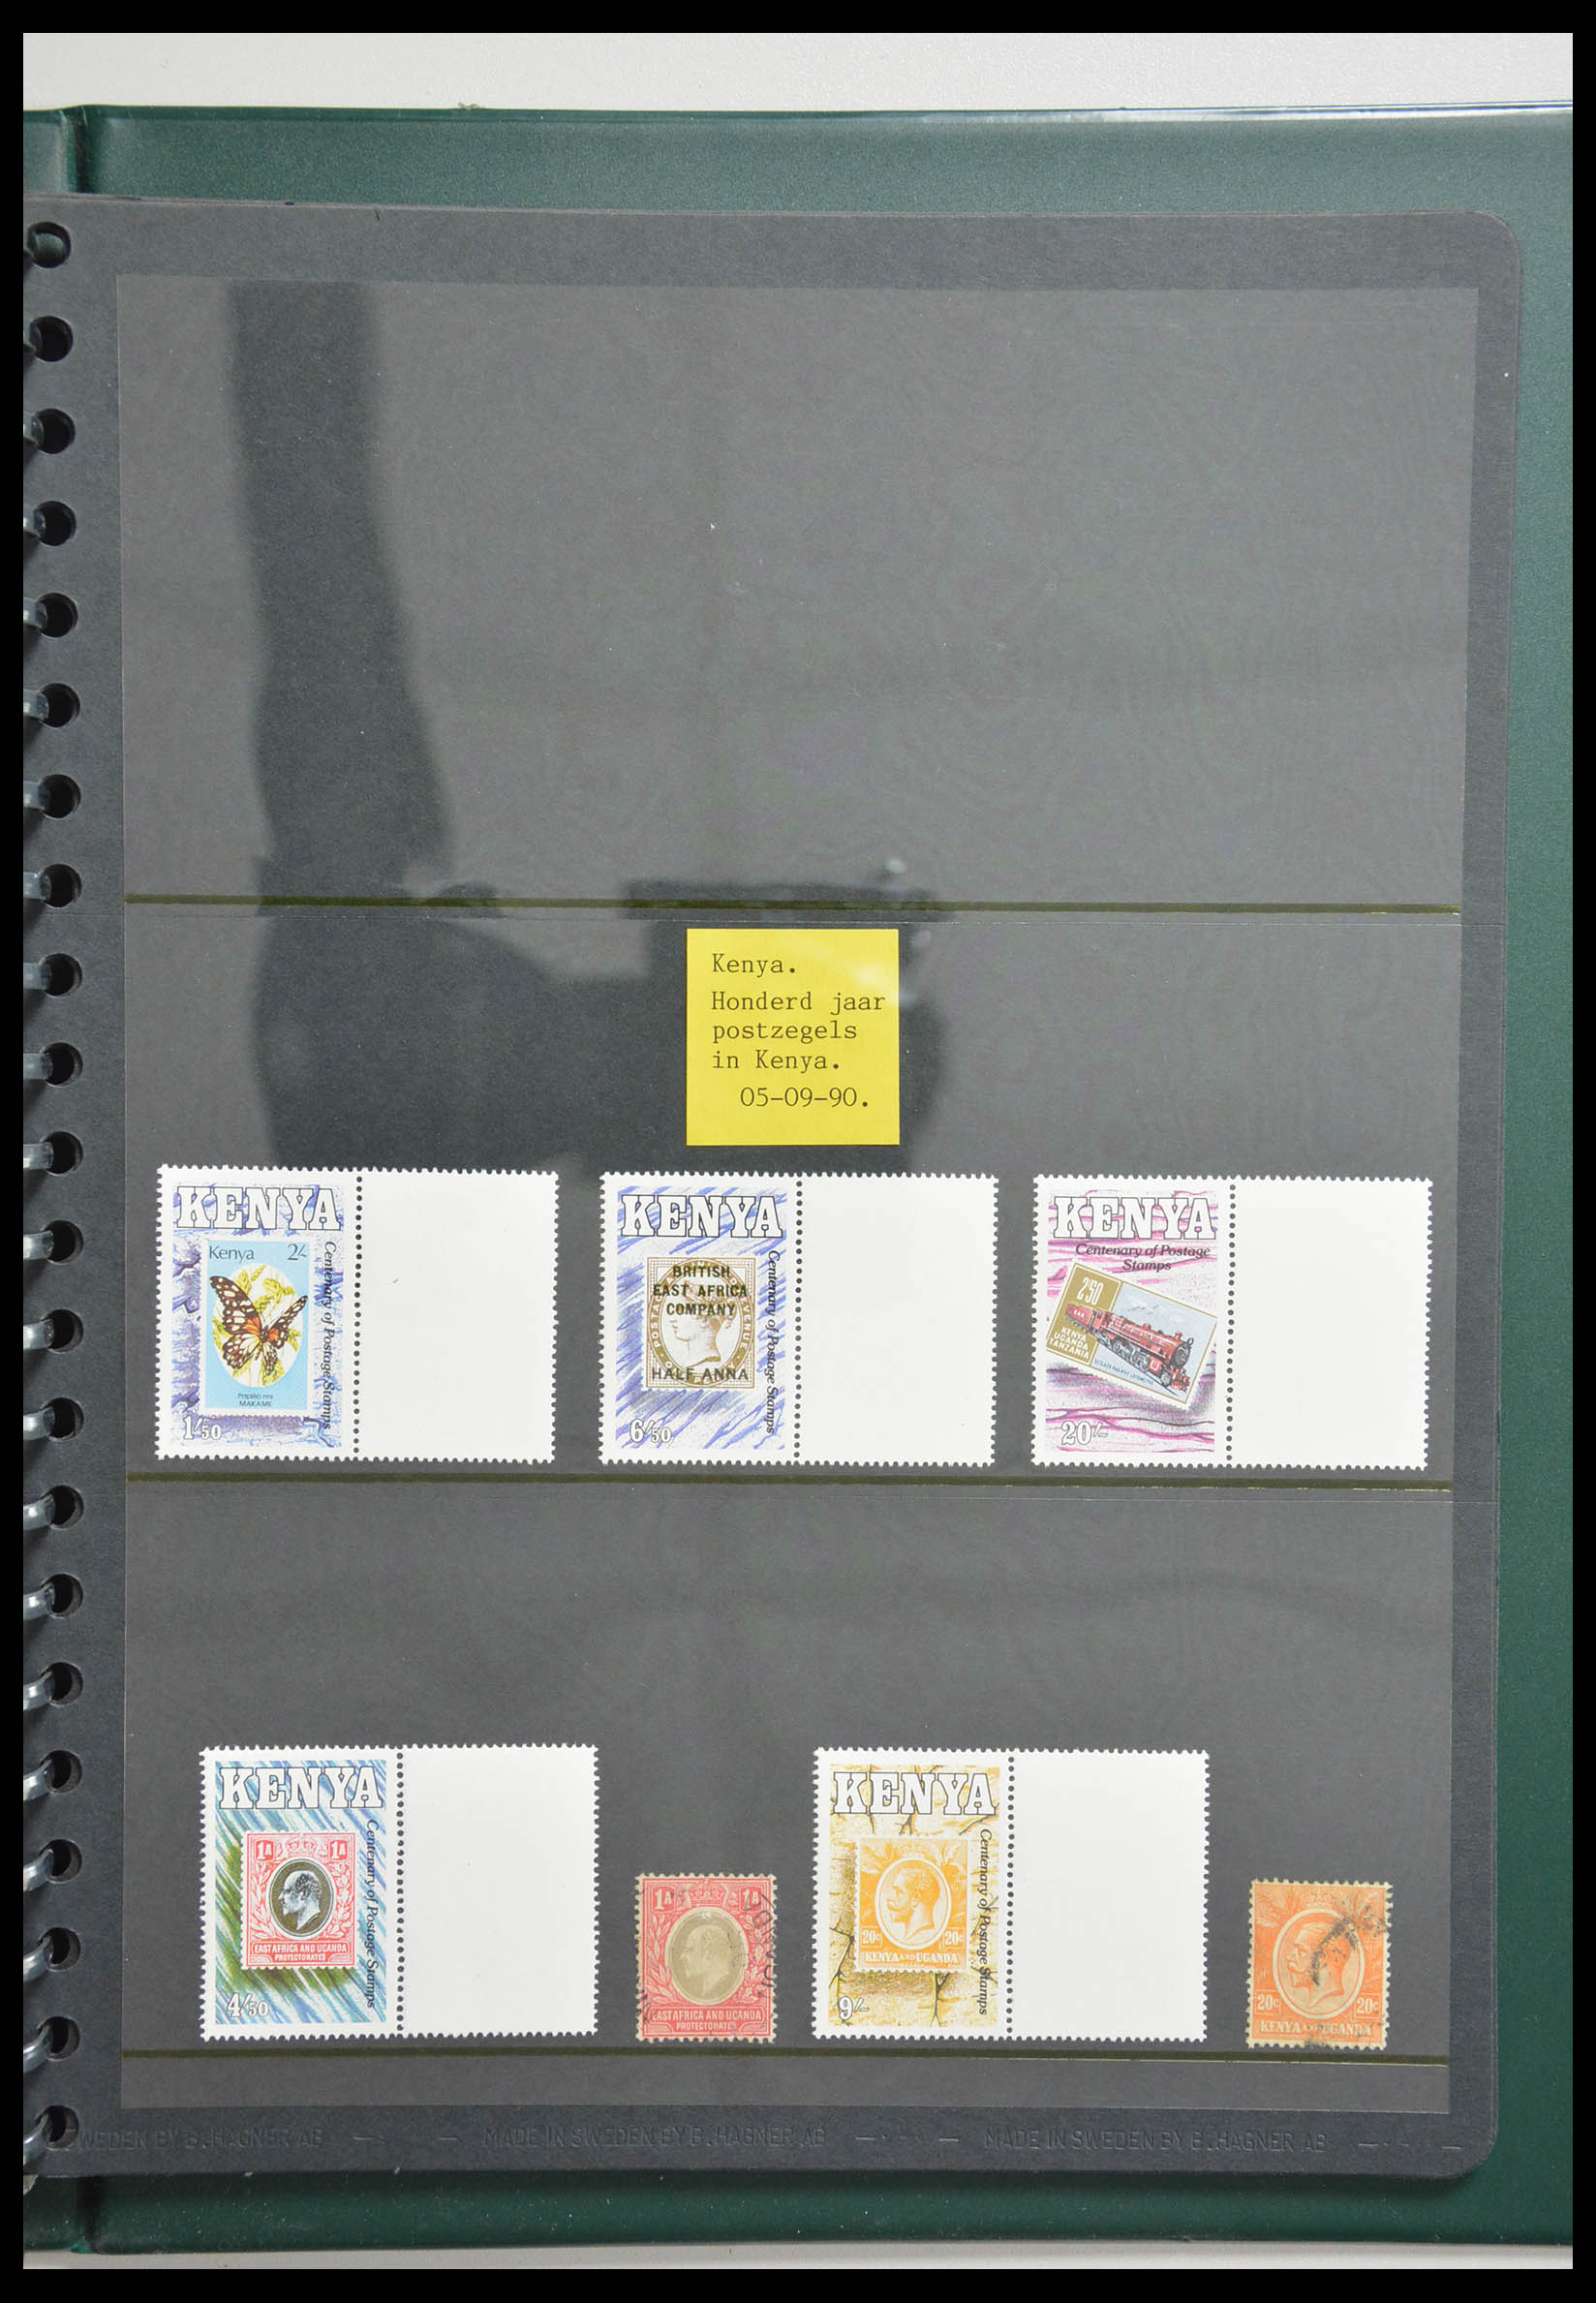 28337 130 - 28337 Postzegel op postzegel 1840-2001.